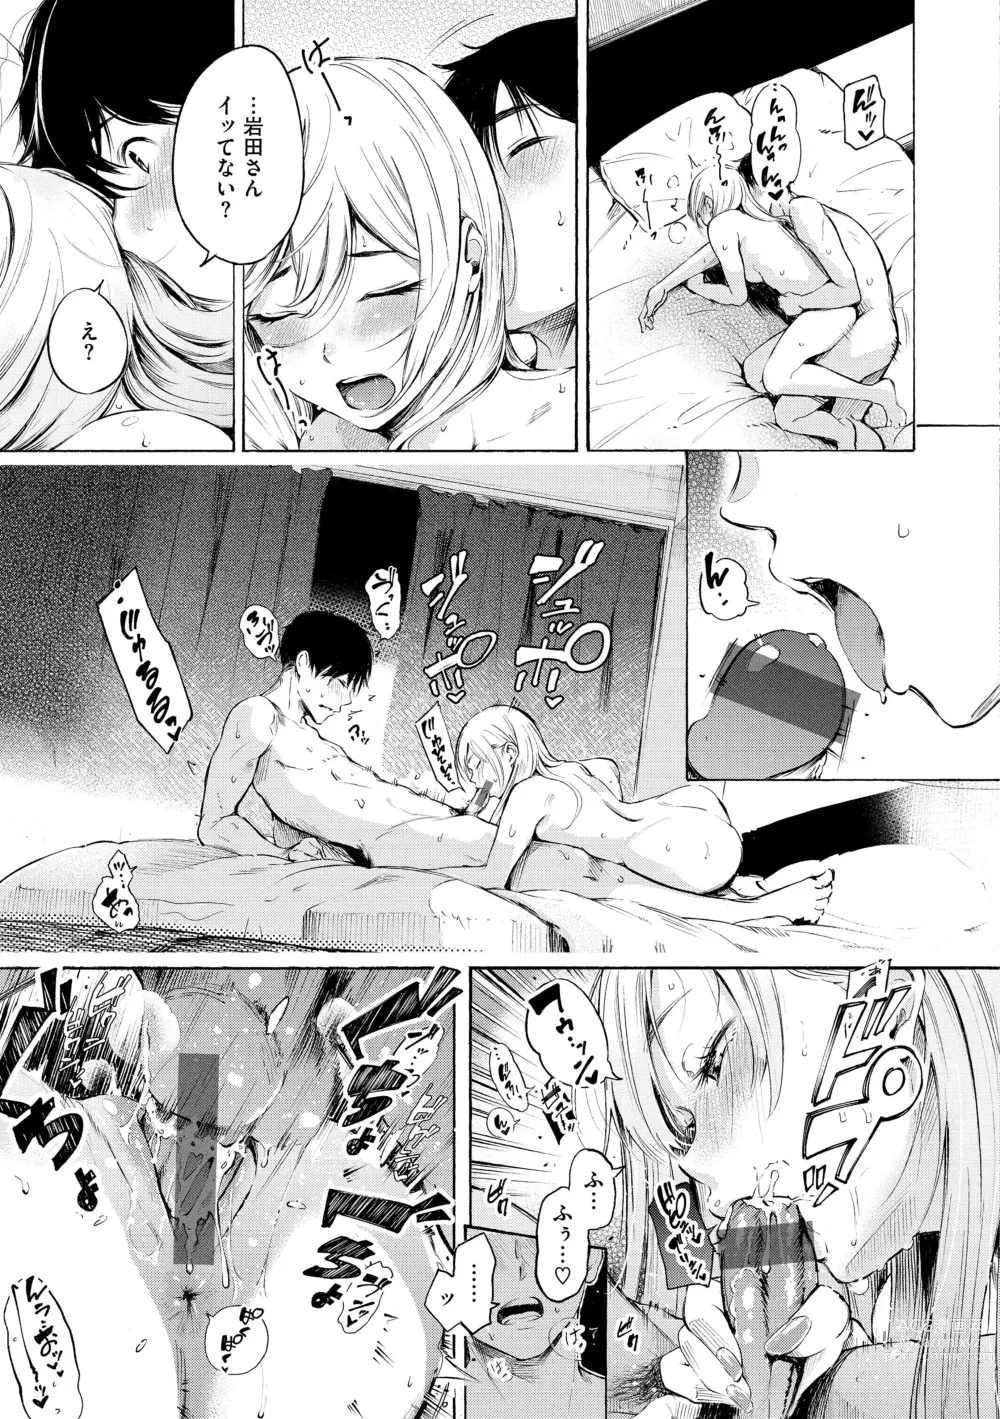 Page 25 of manga Frustration Girls - Mura Mura Girls ready for you!!